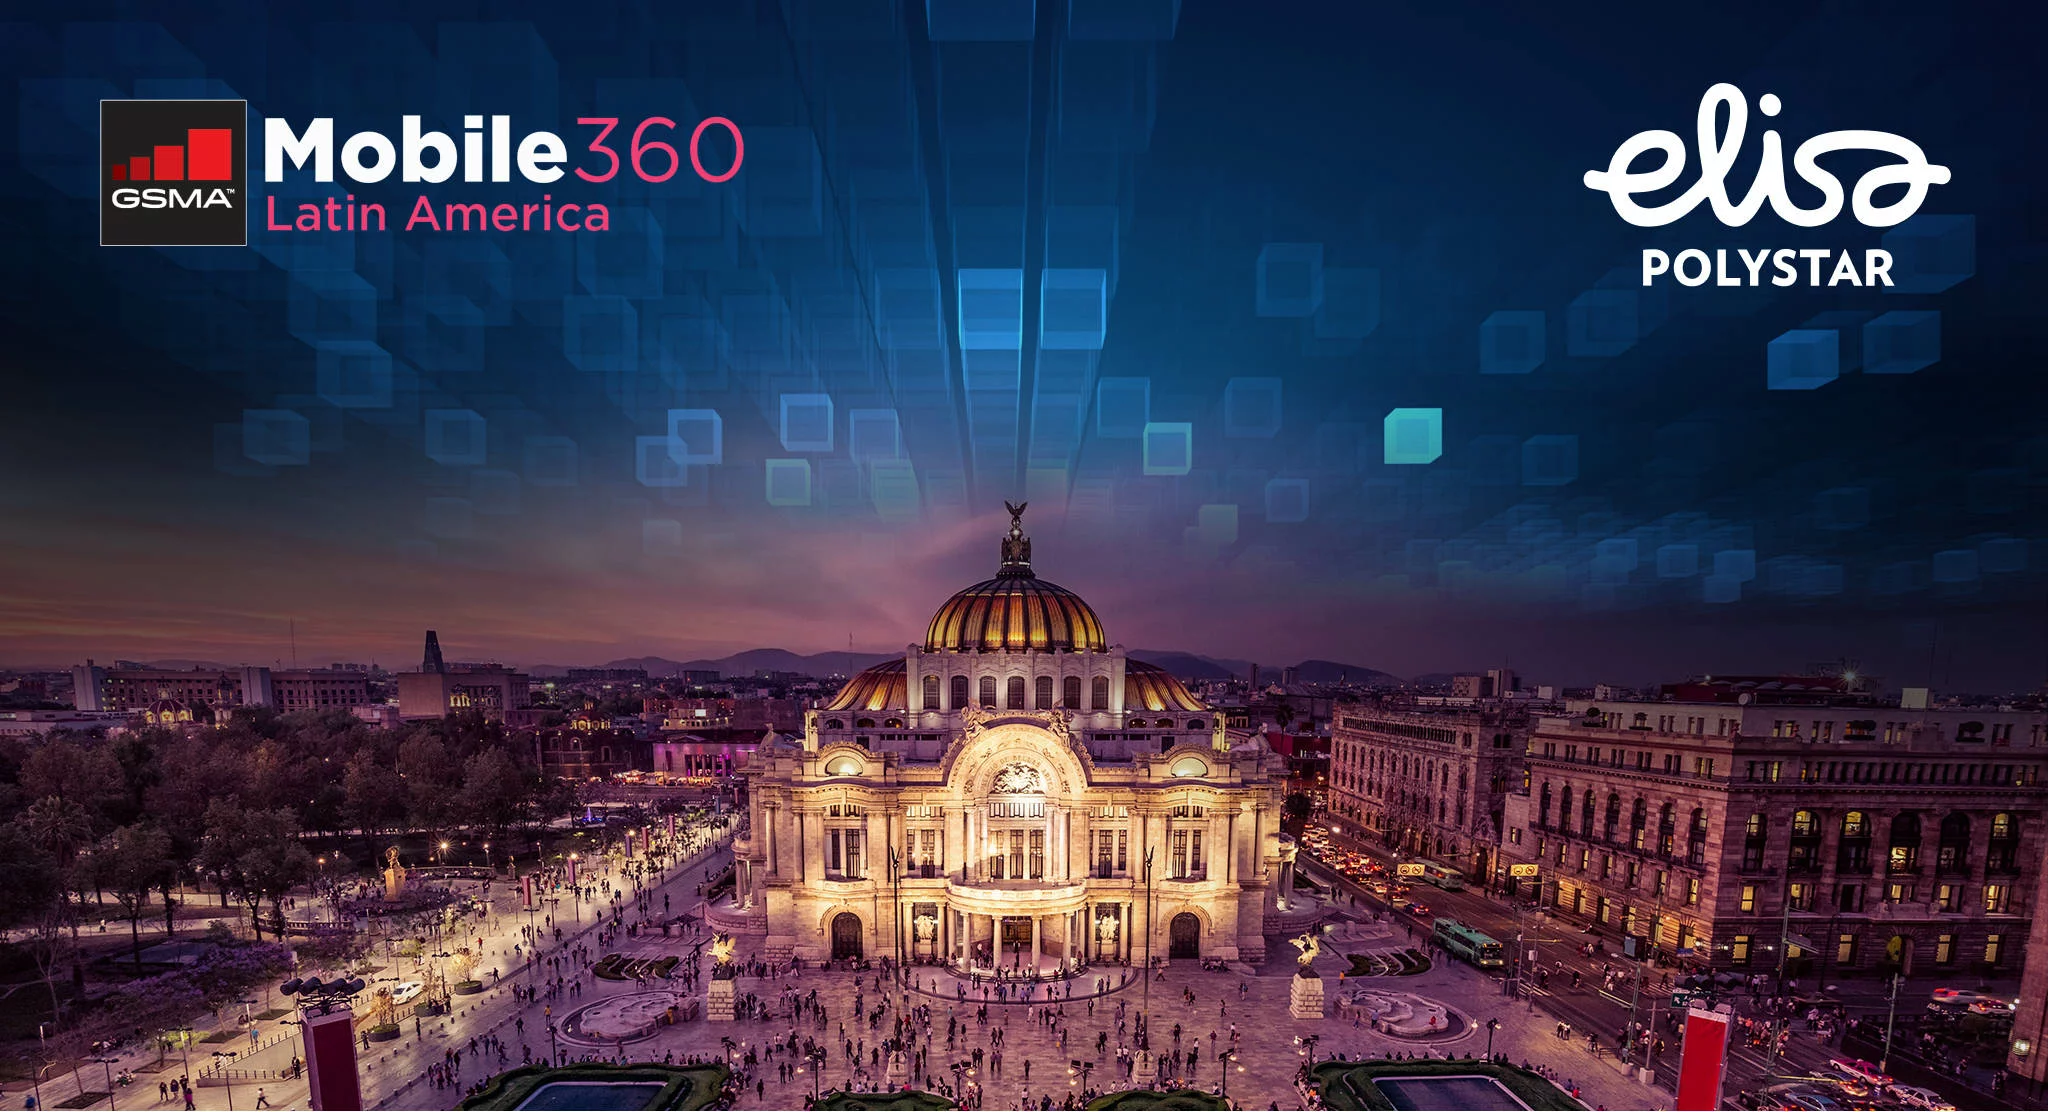 Mobile 360 Latin America